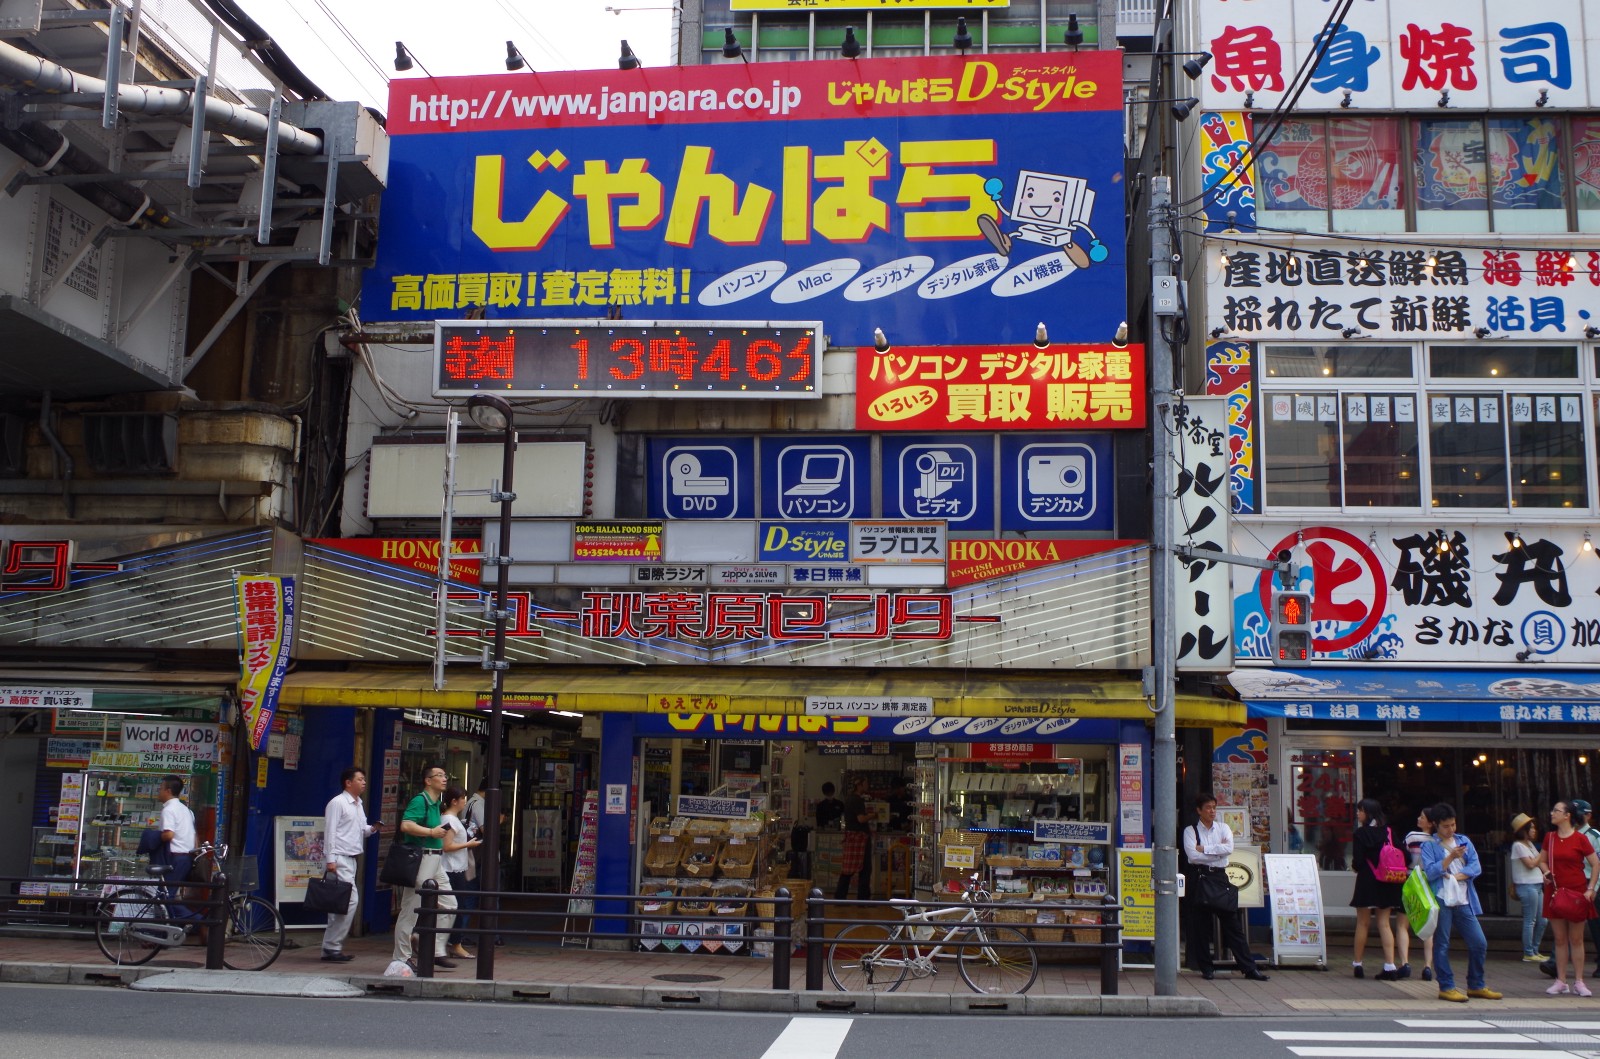 JANPARA D-Style Akihabara branch